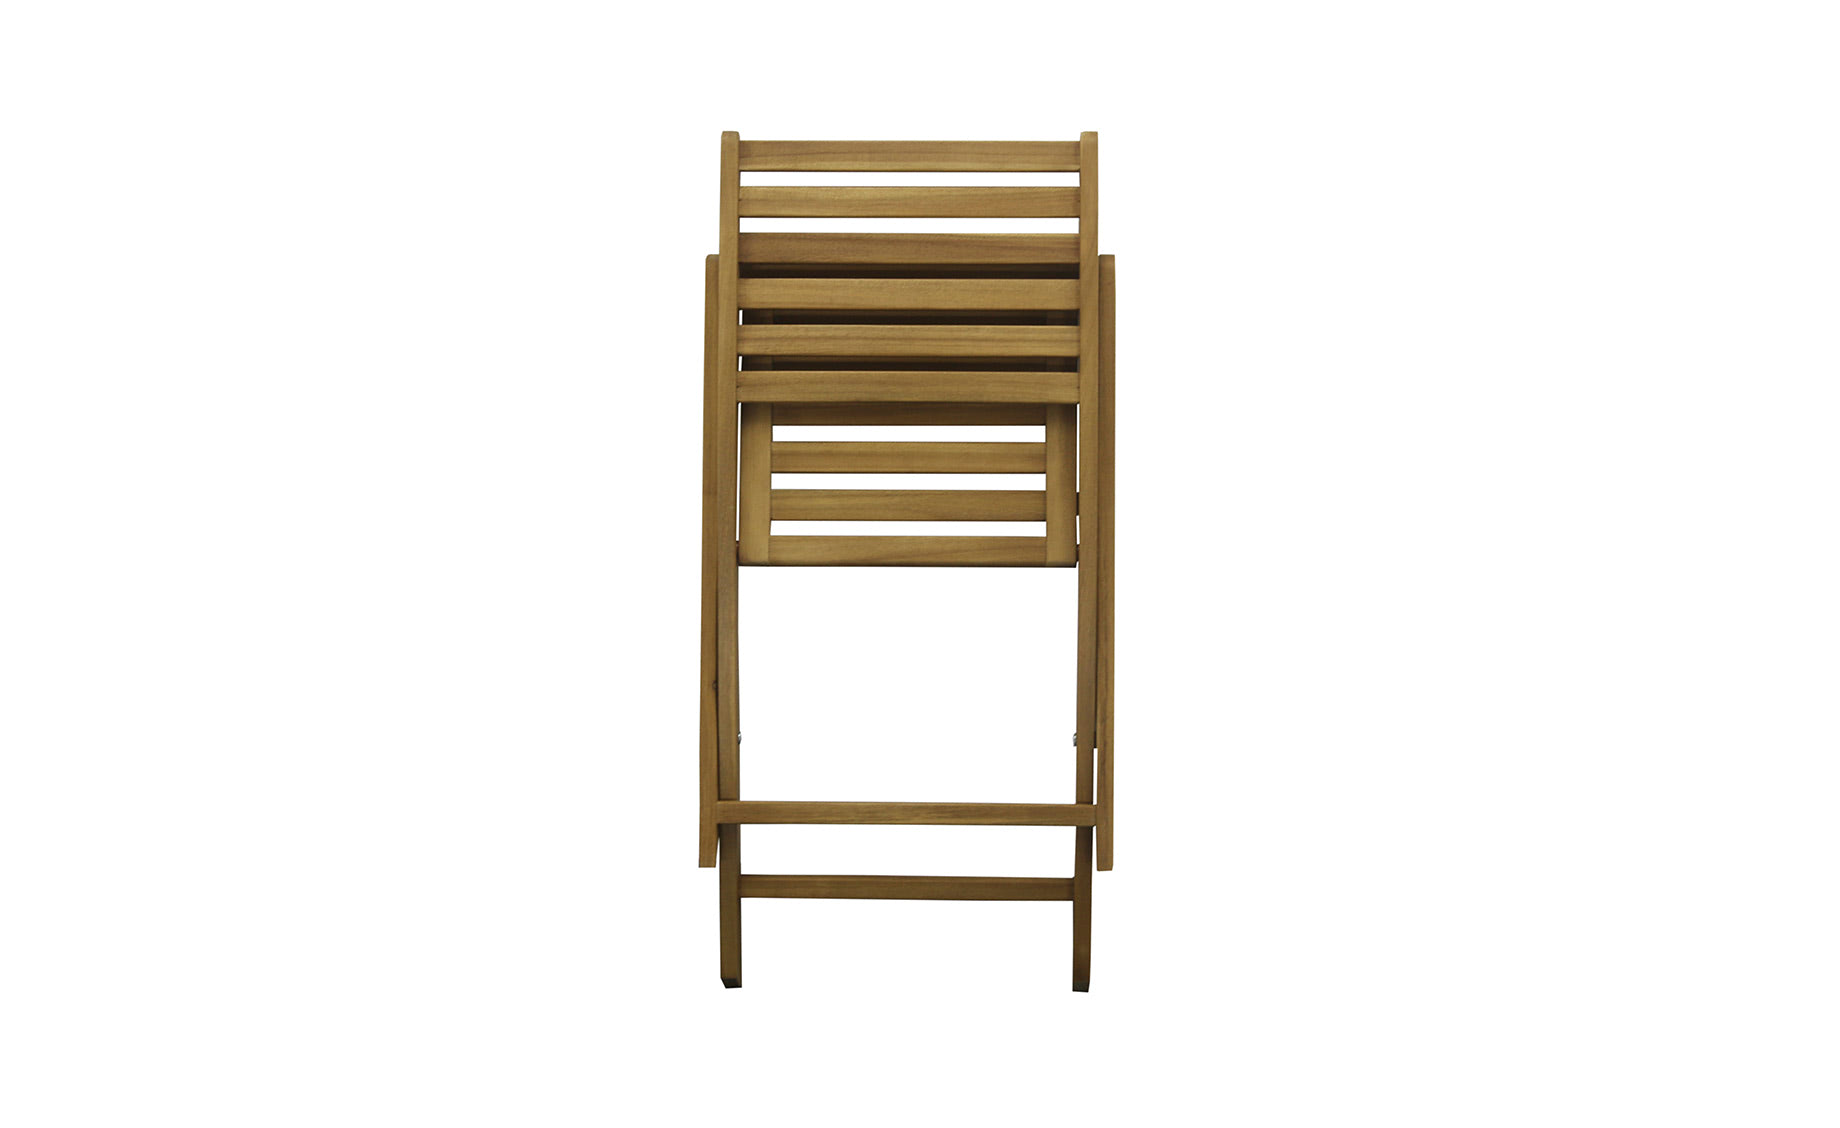 Porto preklopna stolica 46x51x87 cm